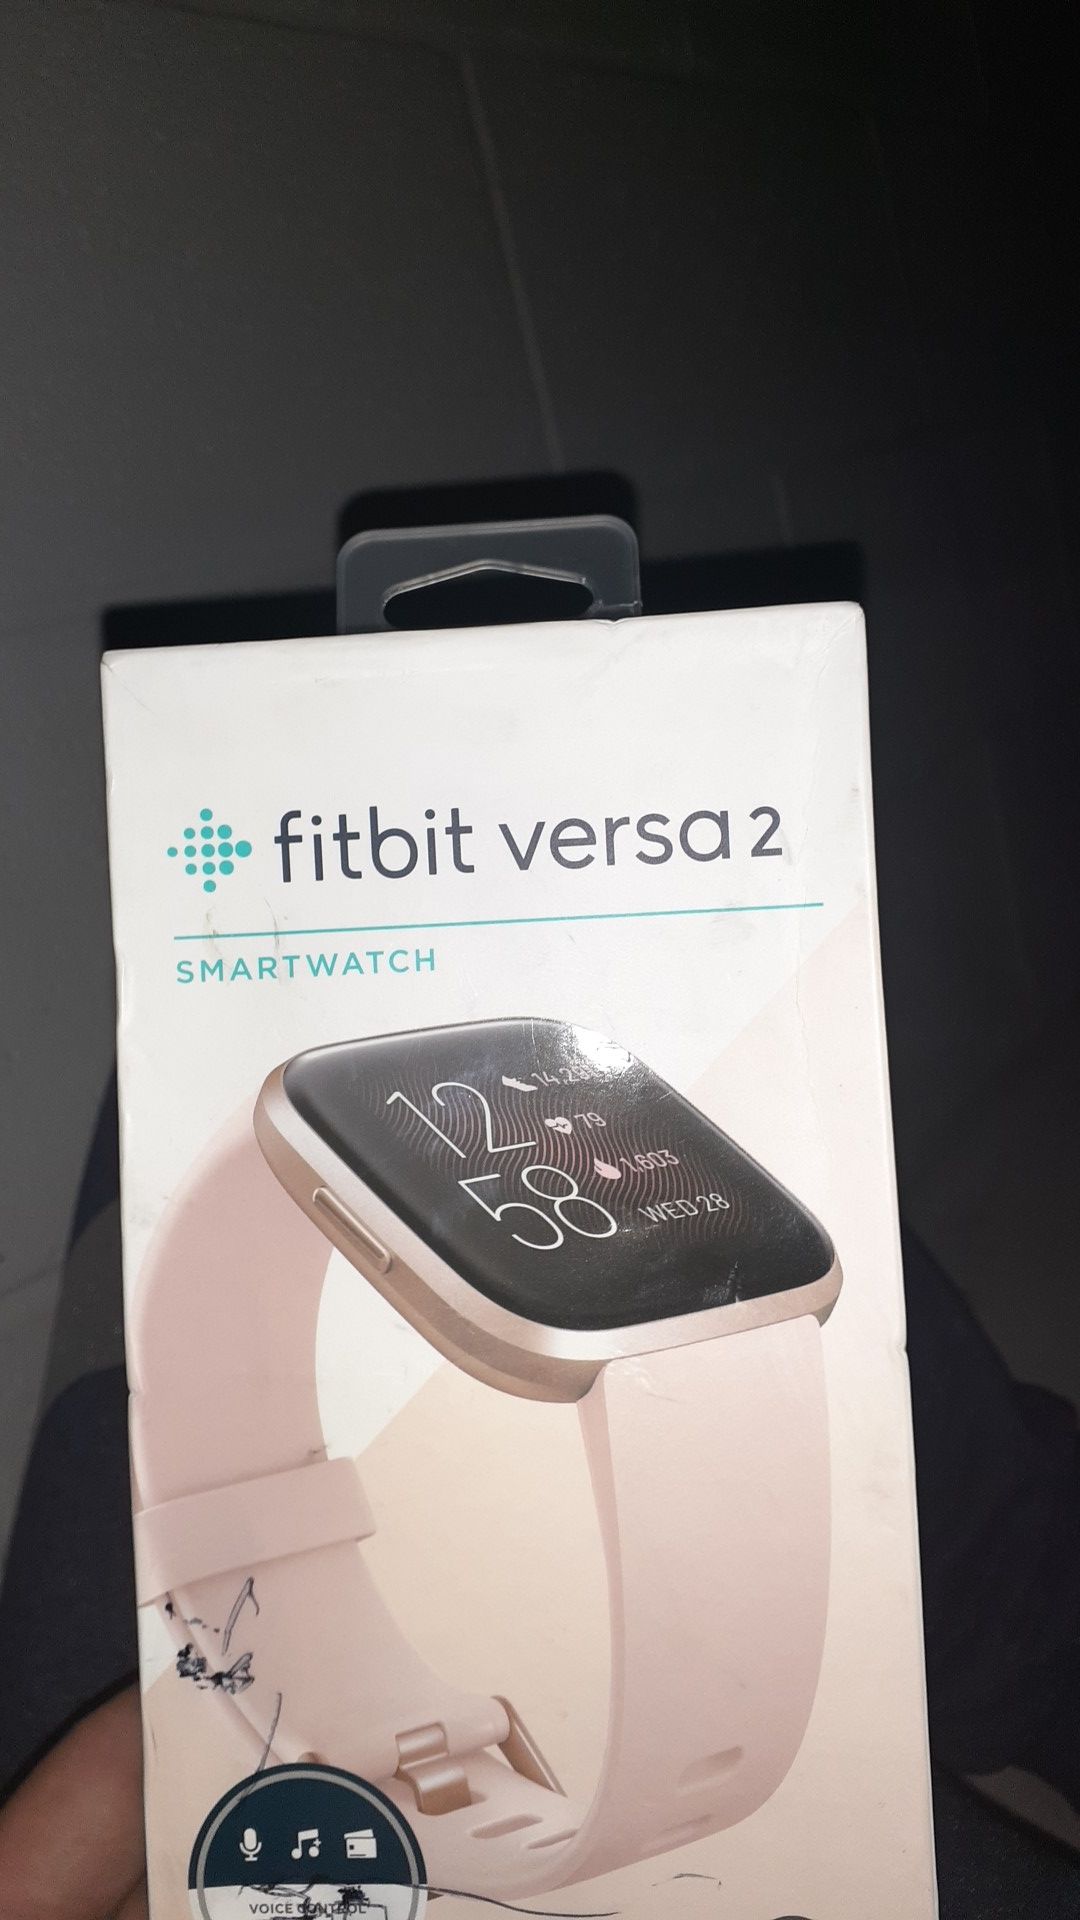 Fitbit Versa 2 smartwatch box never opened